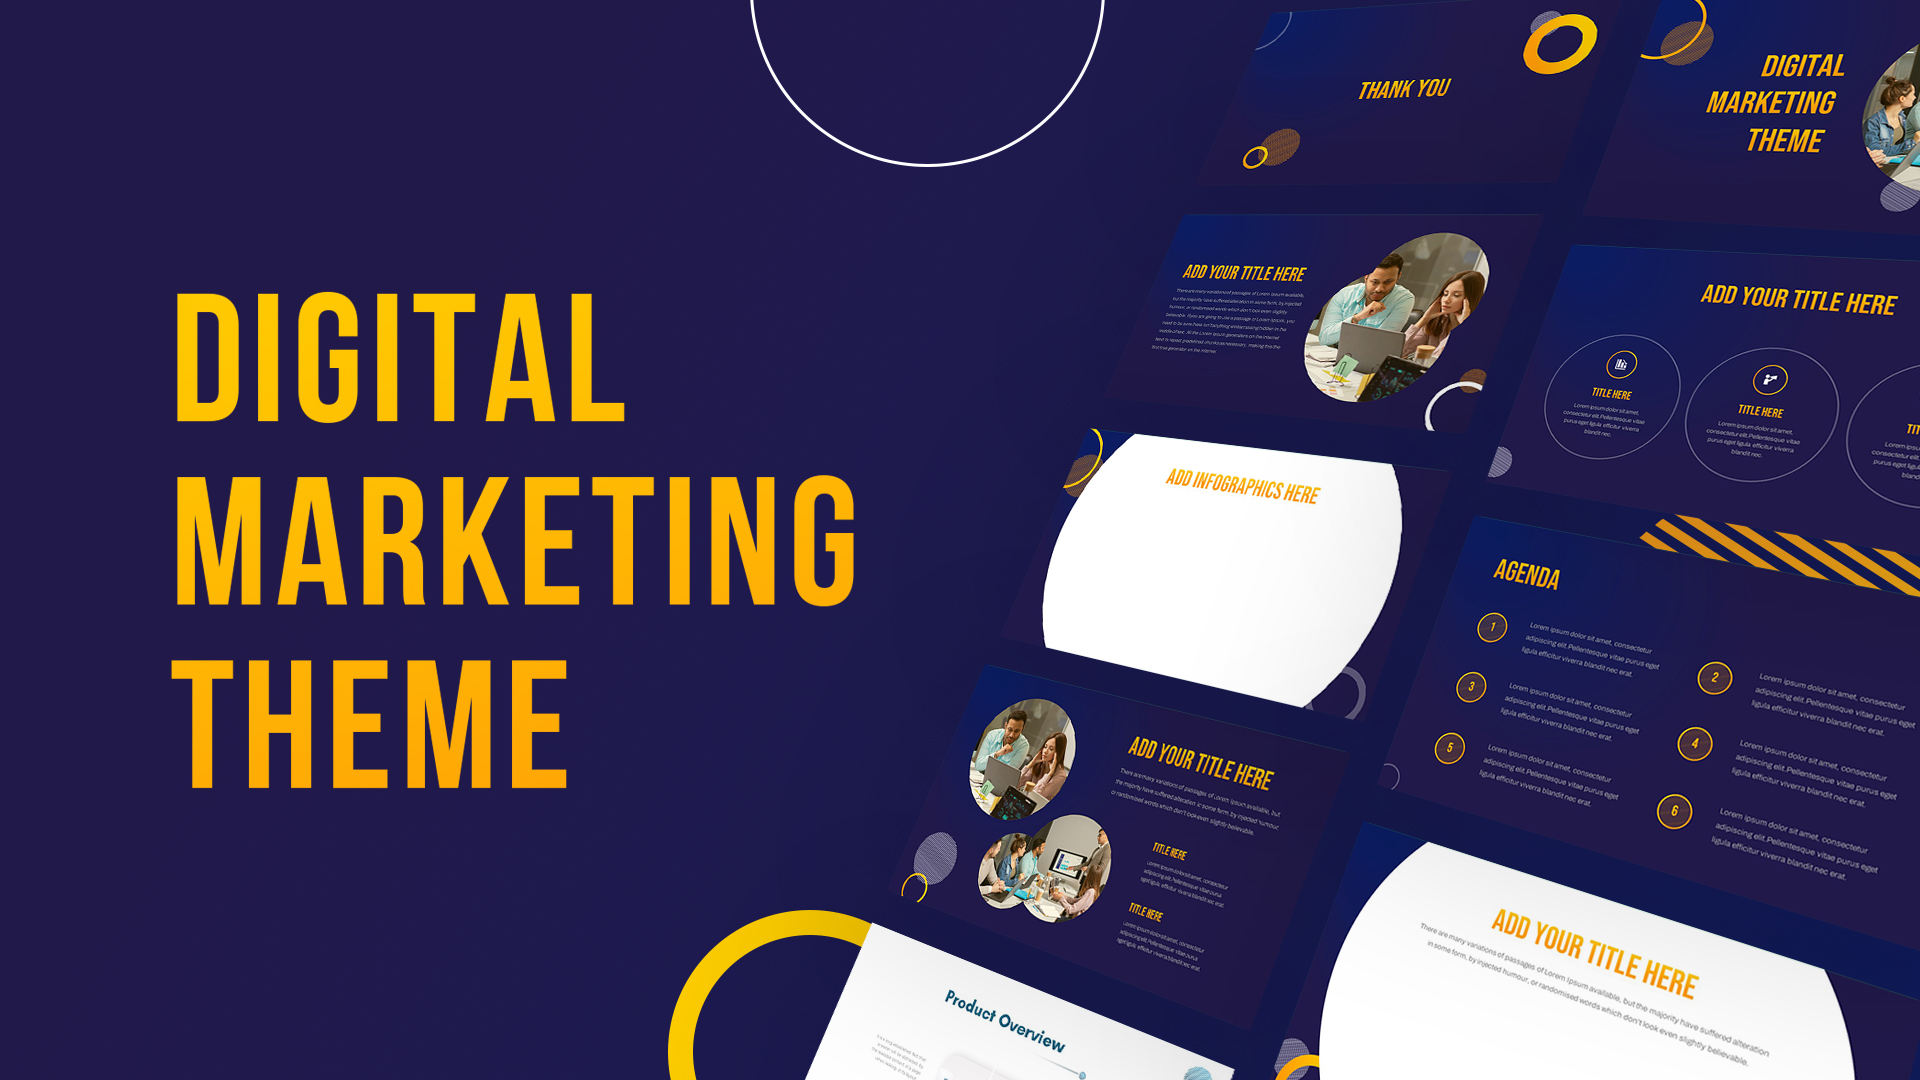 Digital Marketing PowerPoint Theme - SlideBazaar